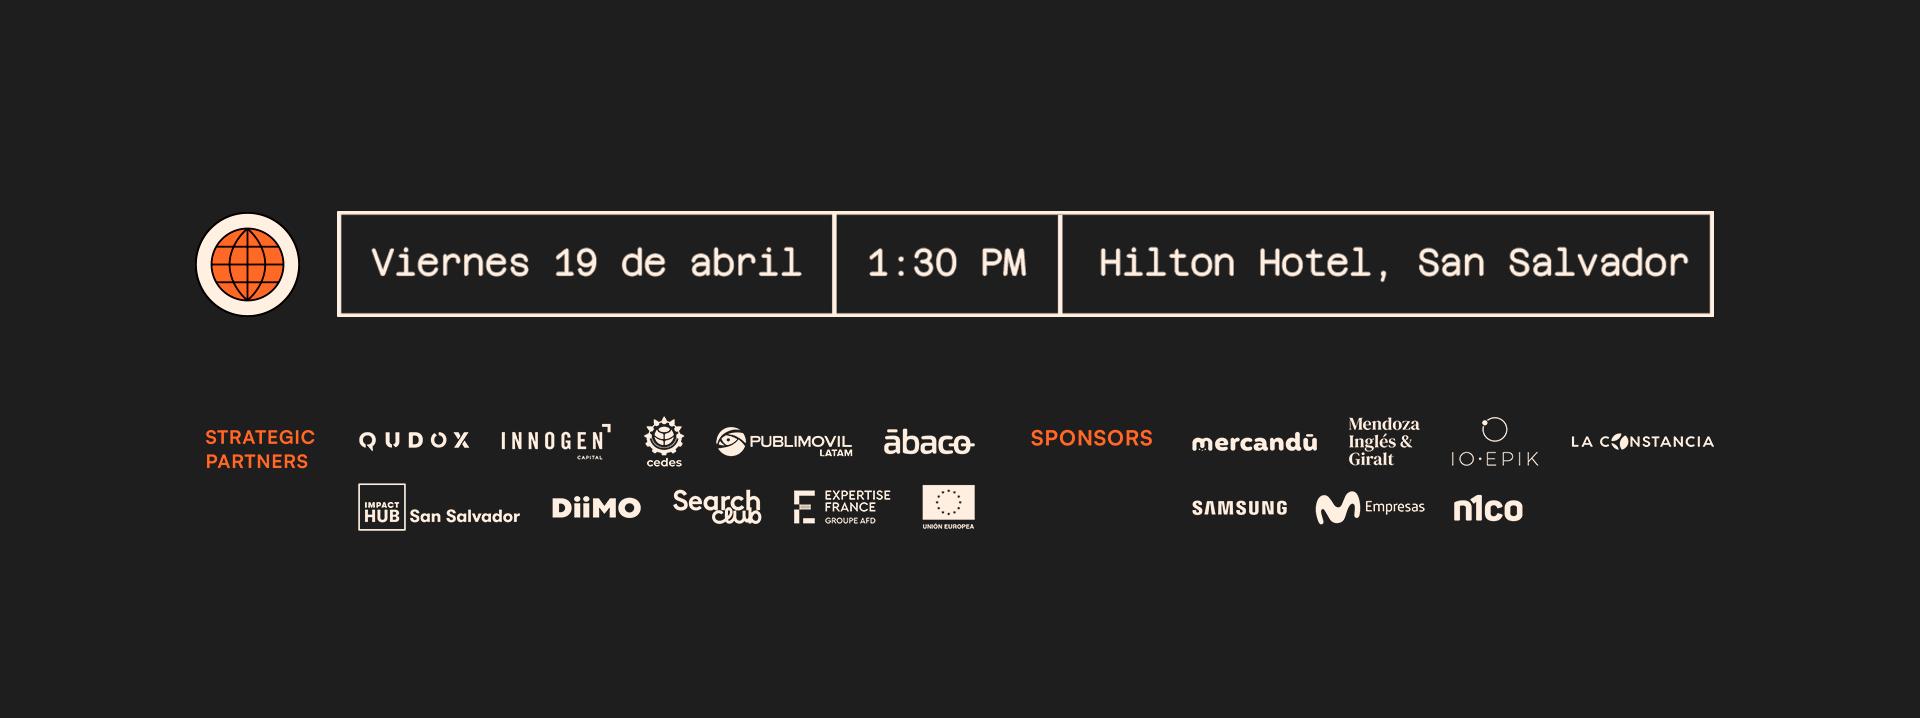 Elaniin AI '24 información general: Hotel Hilton, San Salvador. Viernes 19 de abril, 1:30 P.M.